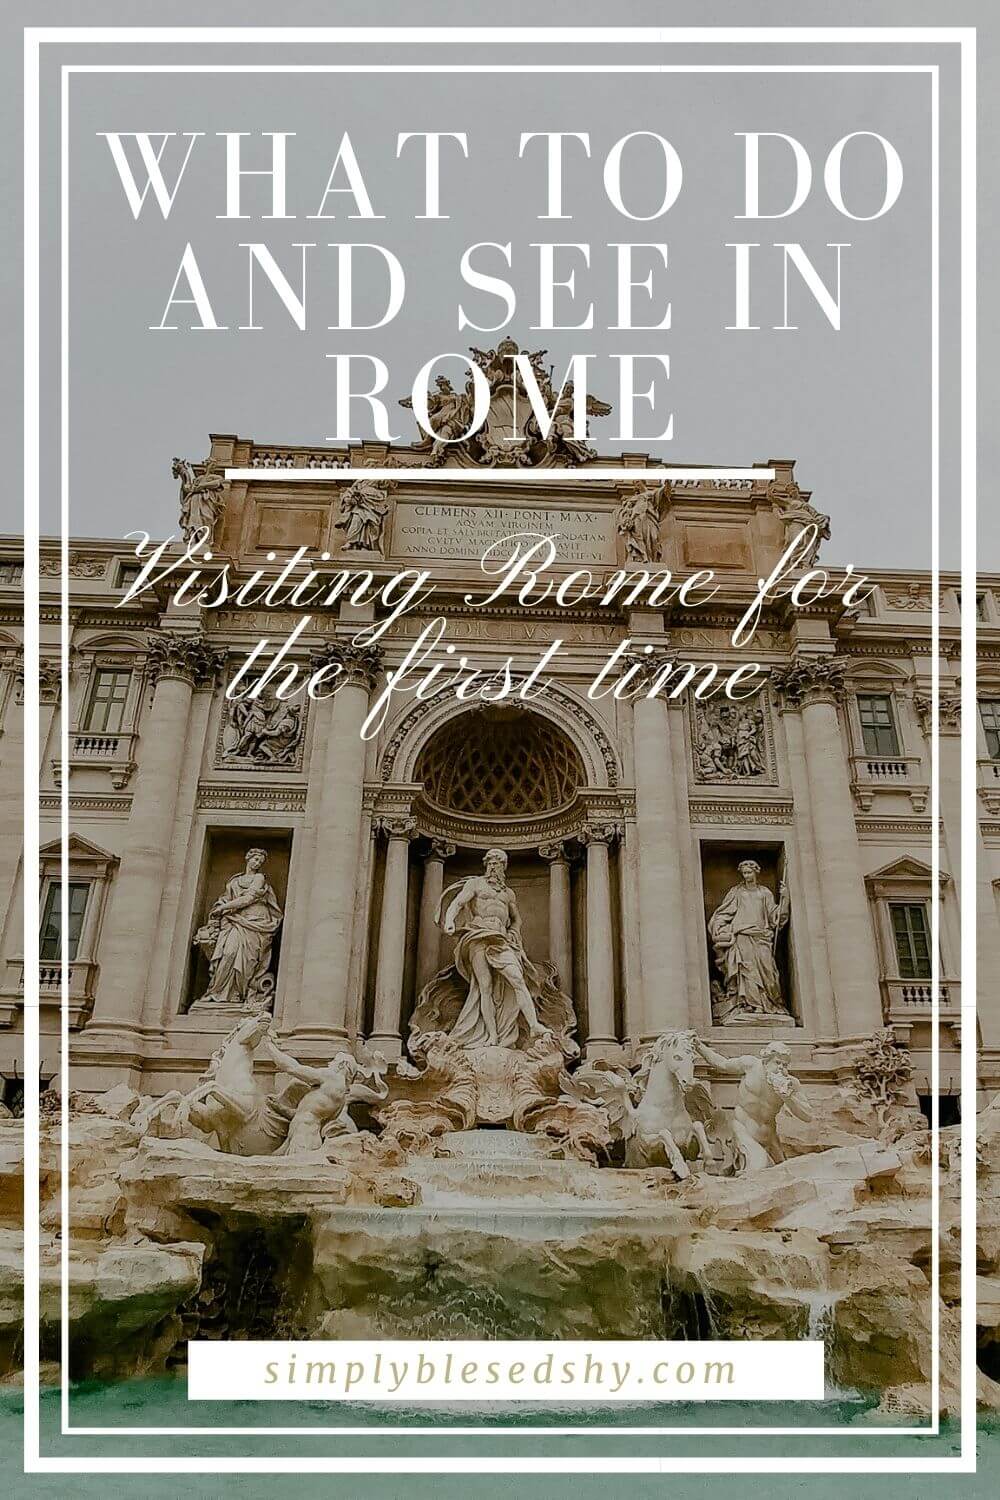 5 Days in Rome